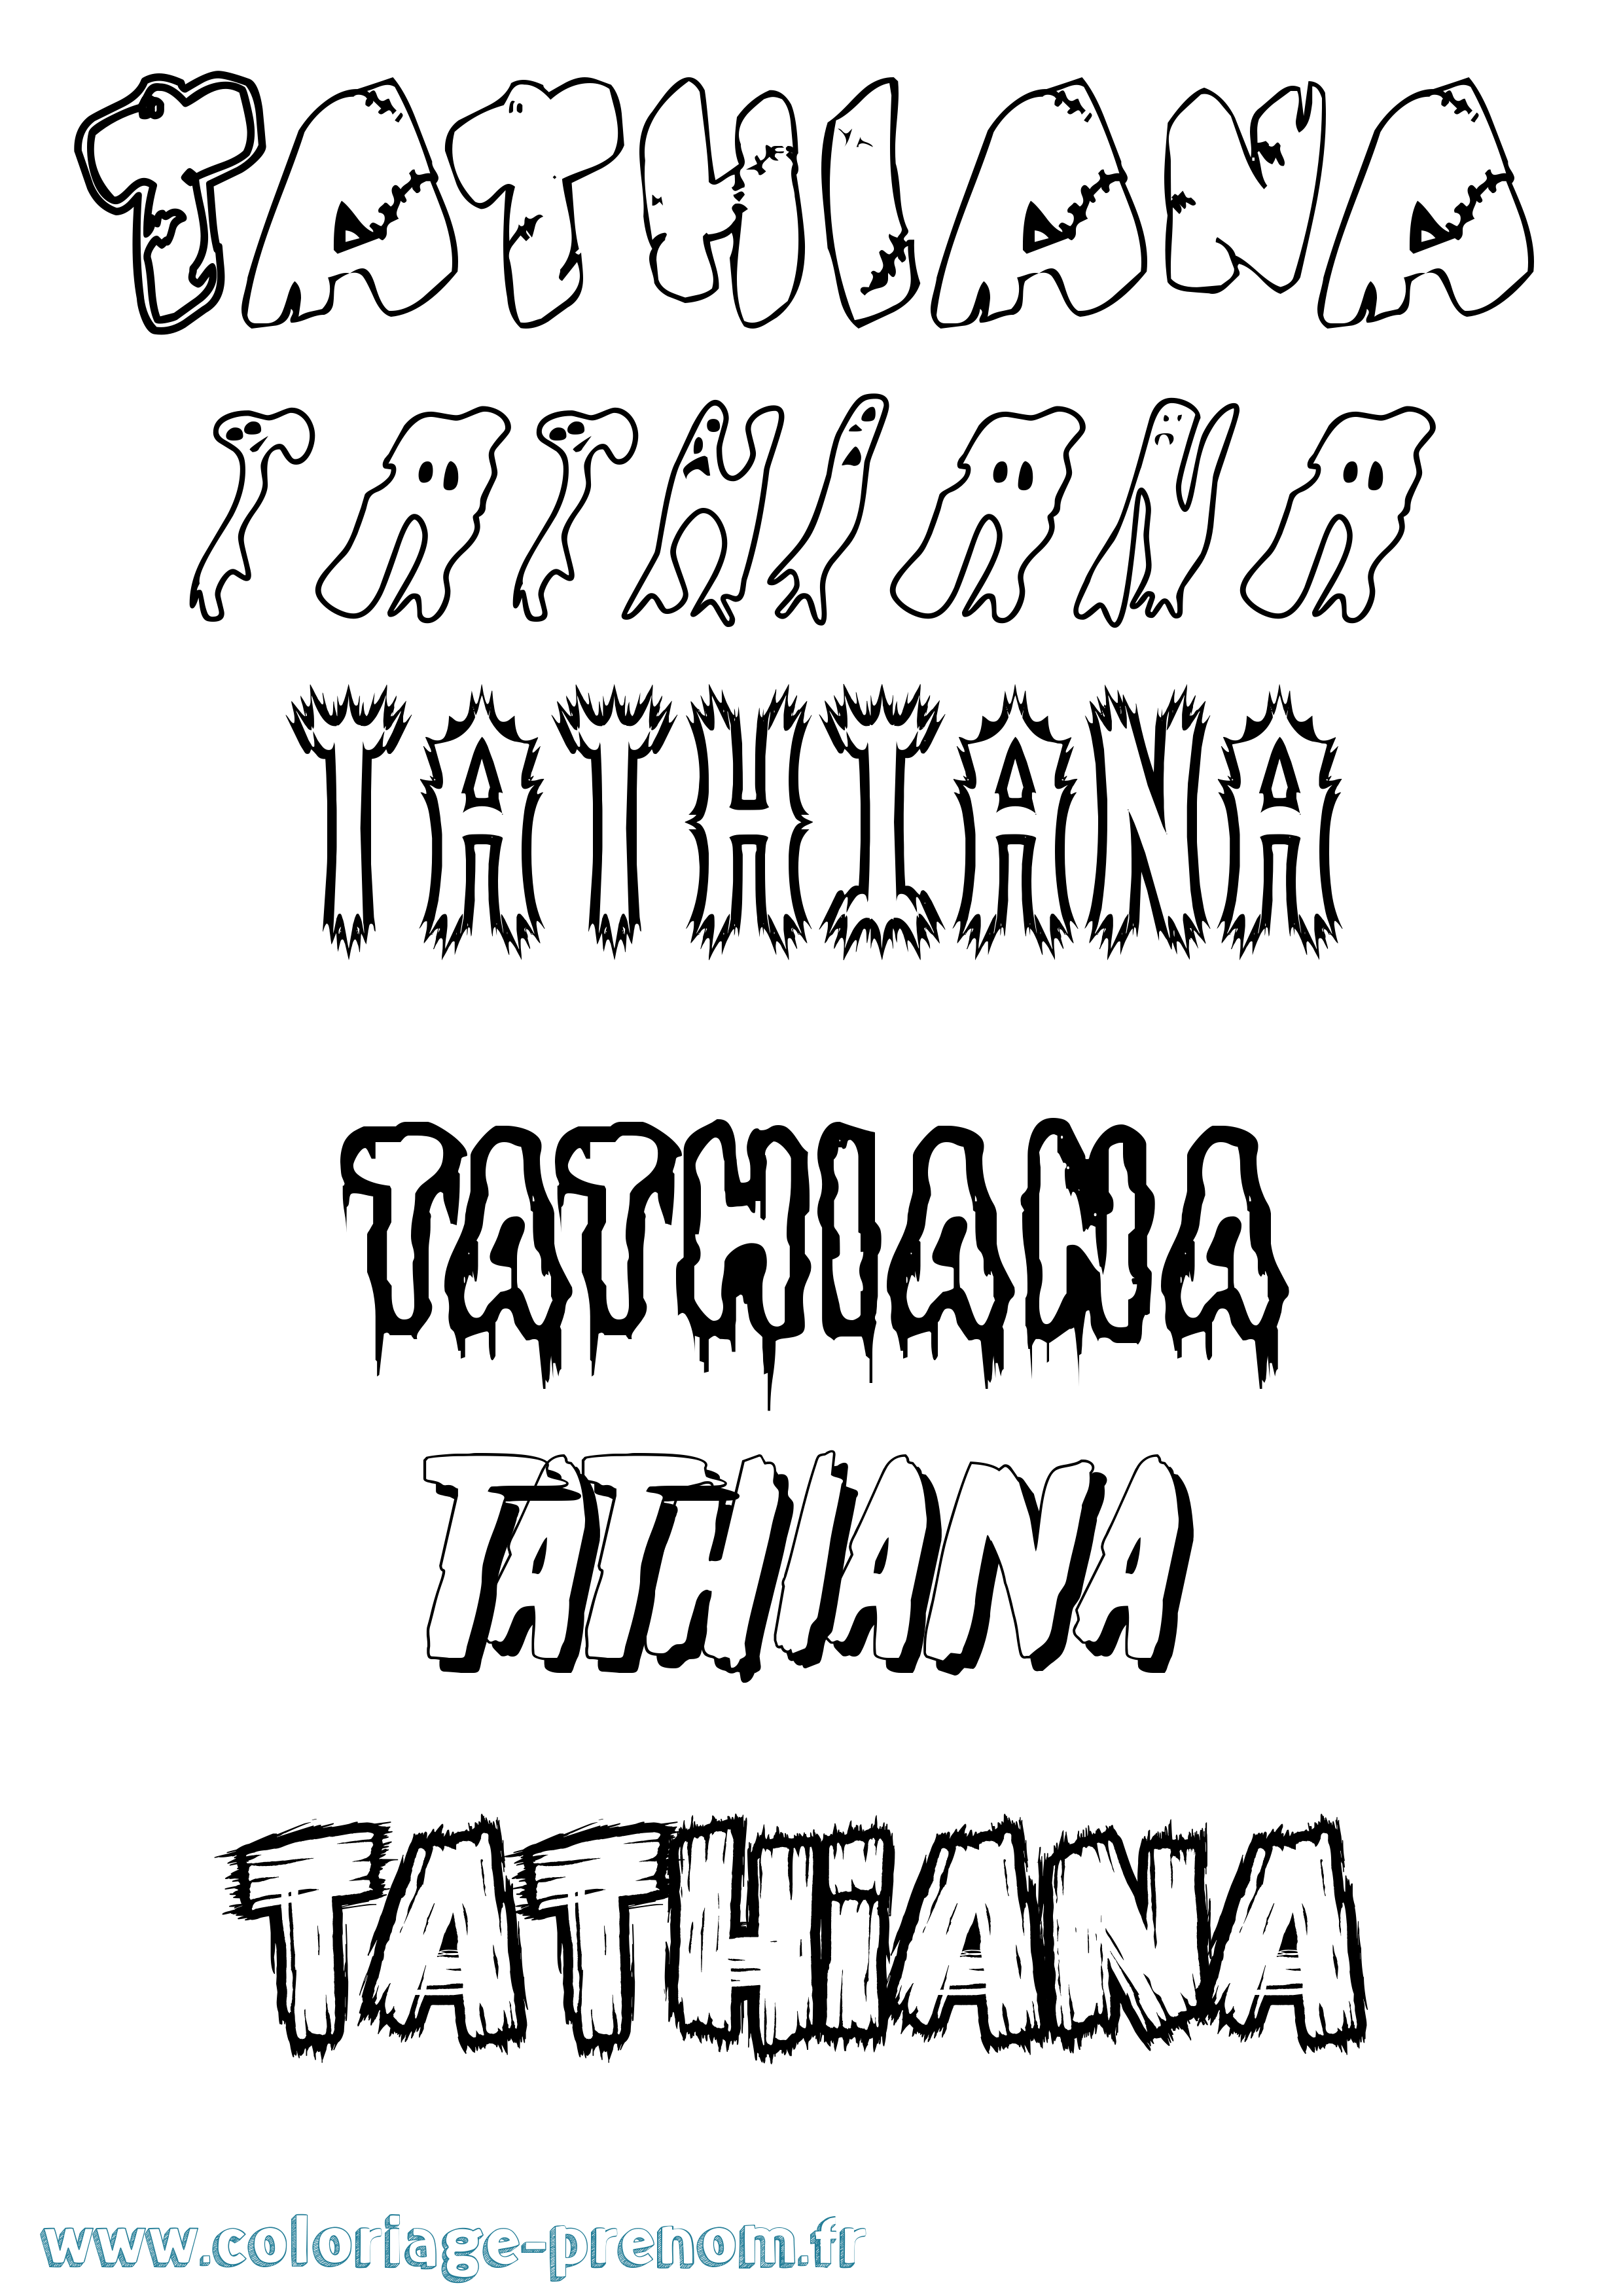 Coloriage prénom Tathiana Frisson